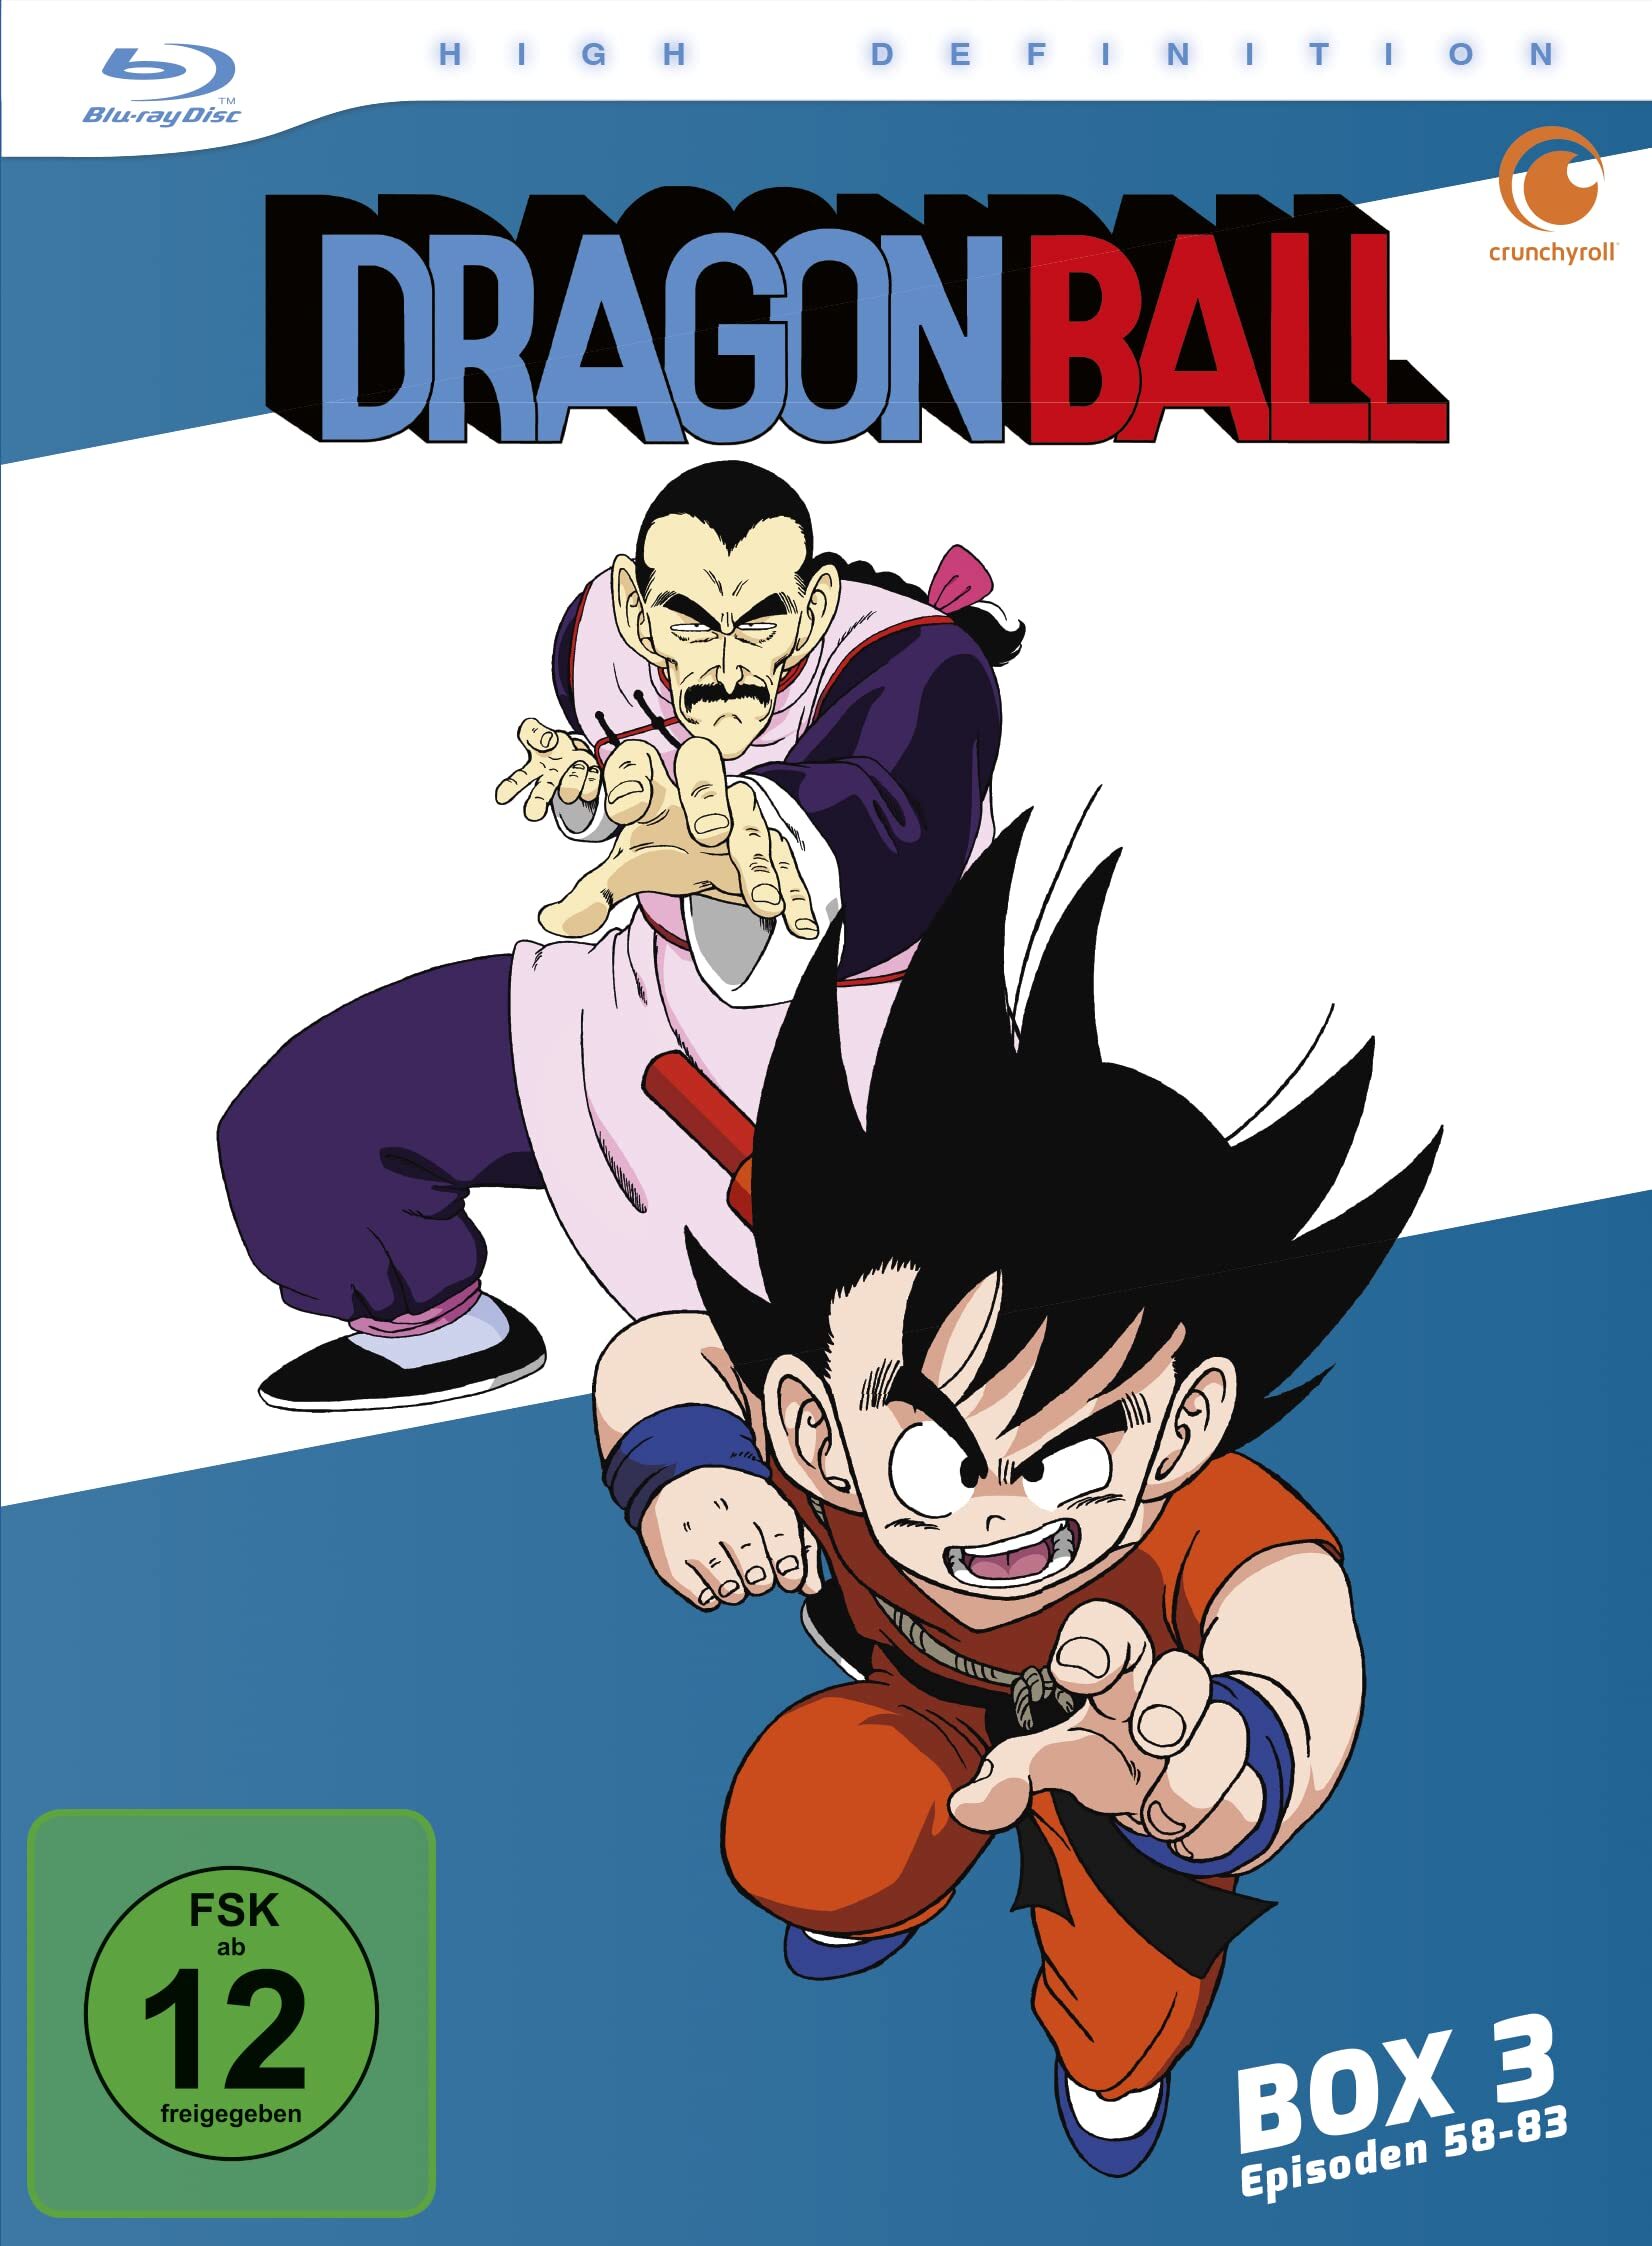 Unleash the Beast: New Dragon Ball Xenoverse 2 DVD from Dragon Ball Super: Super  Hero - Game News 24